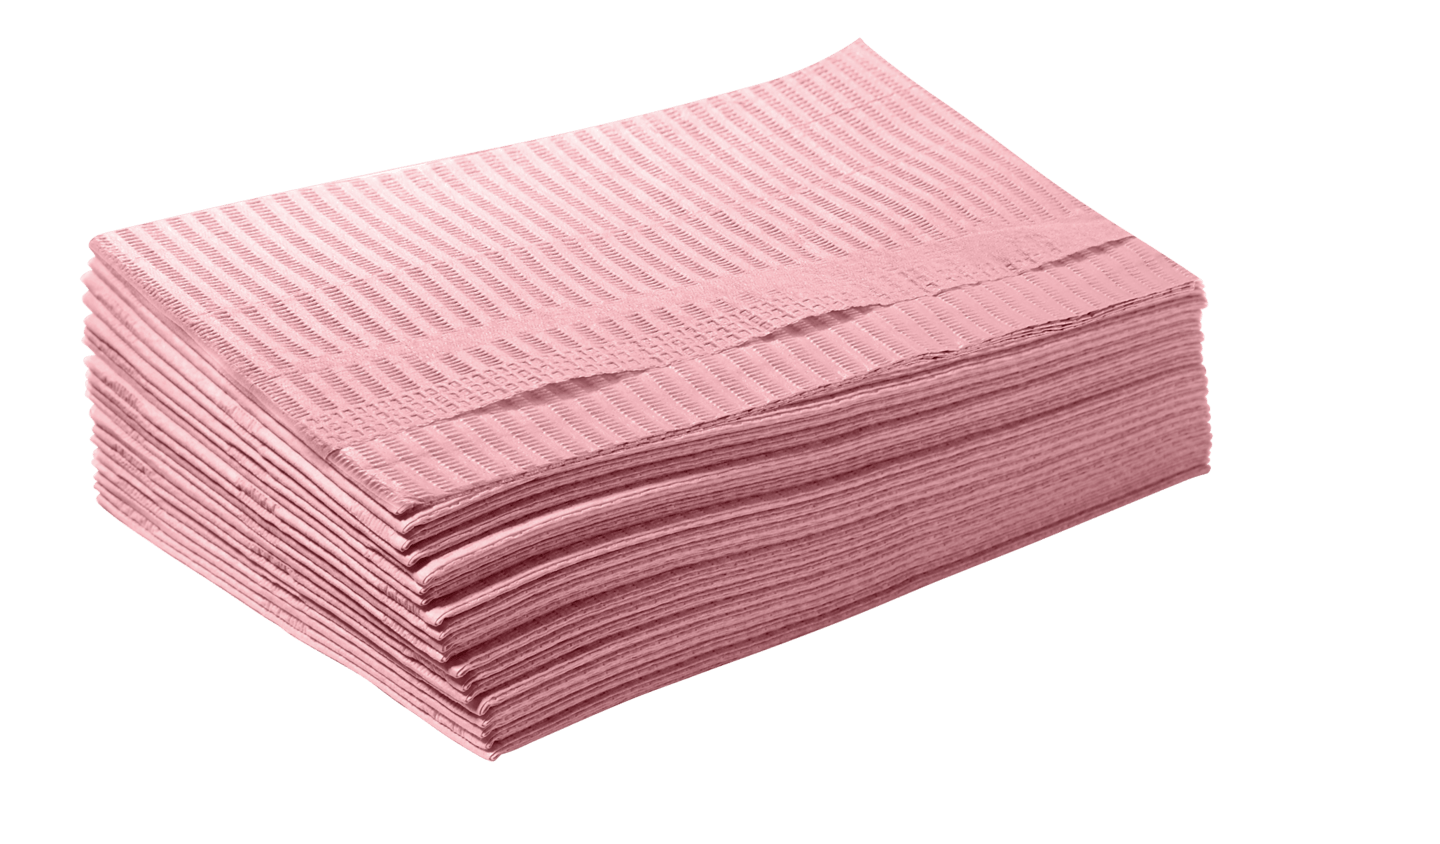 RUCK - Beschichtete Servietten in rosa